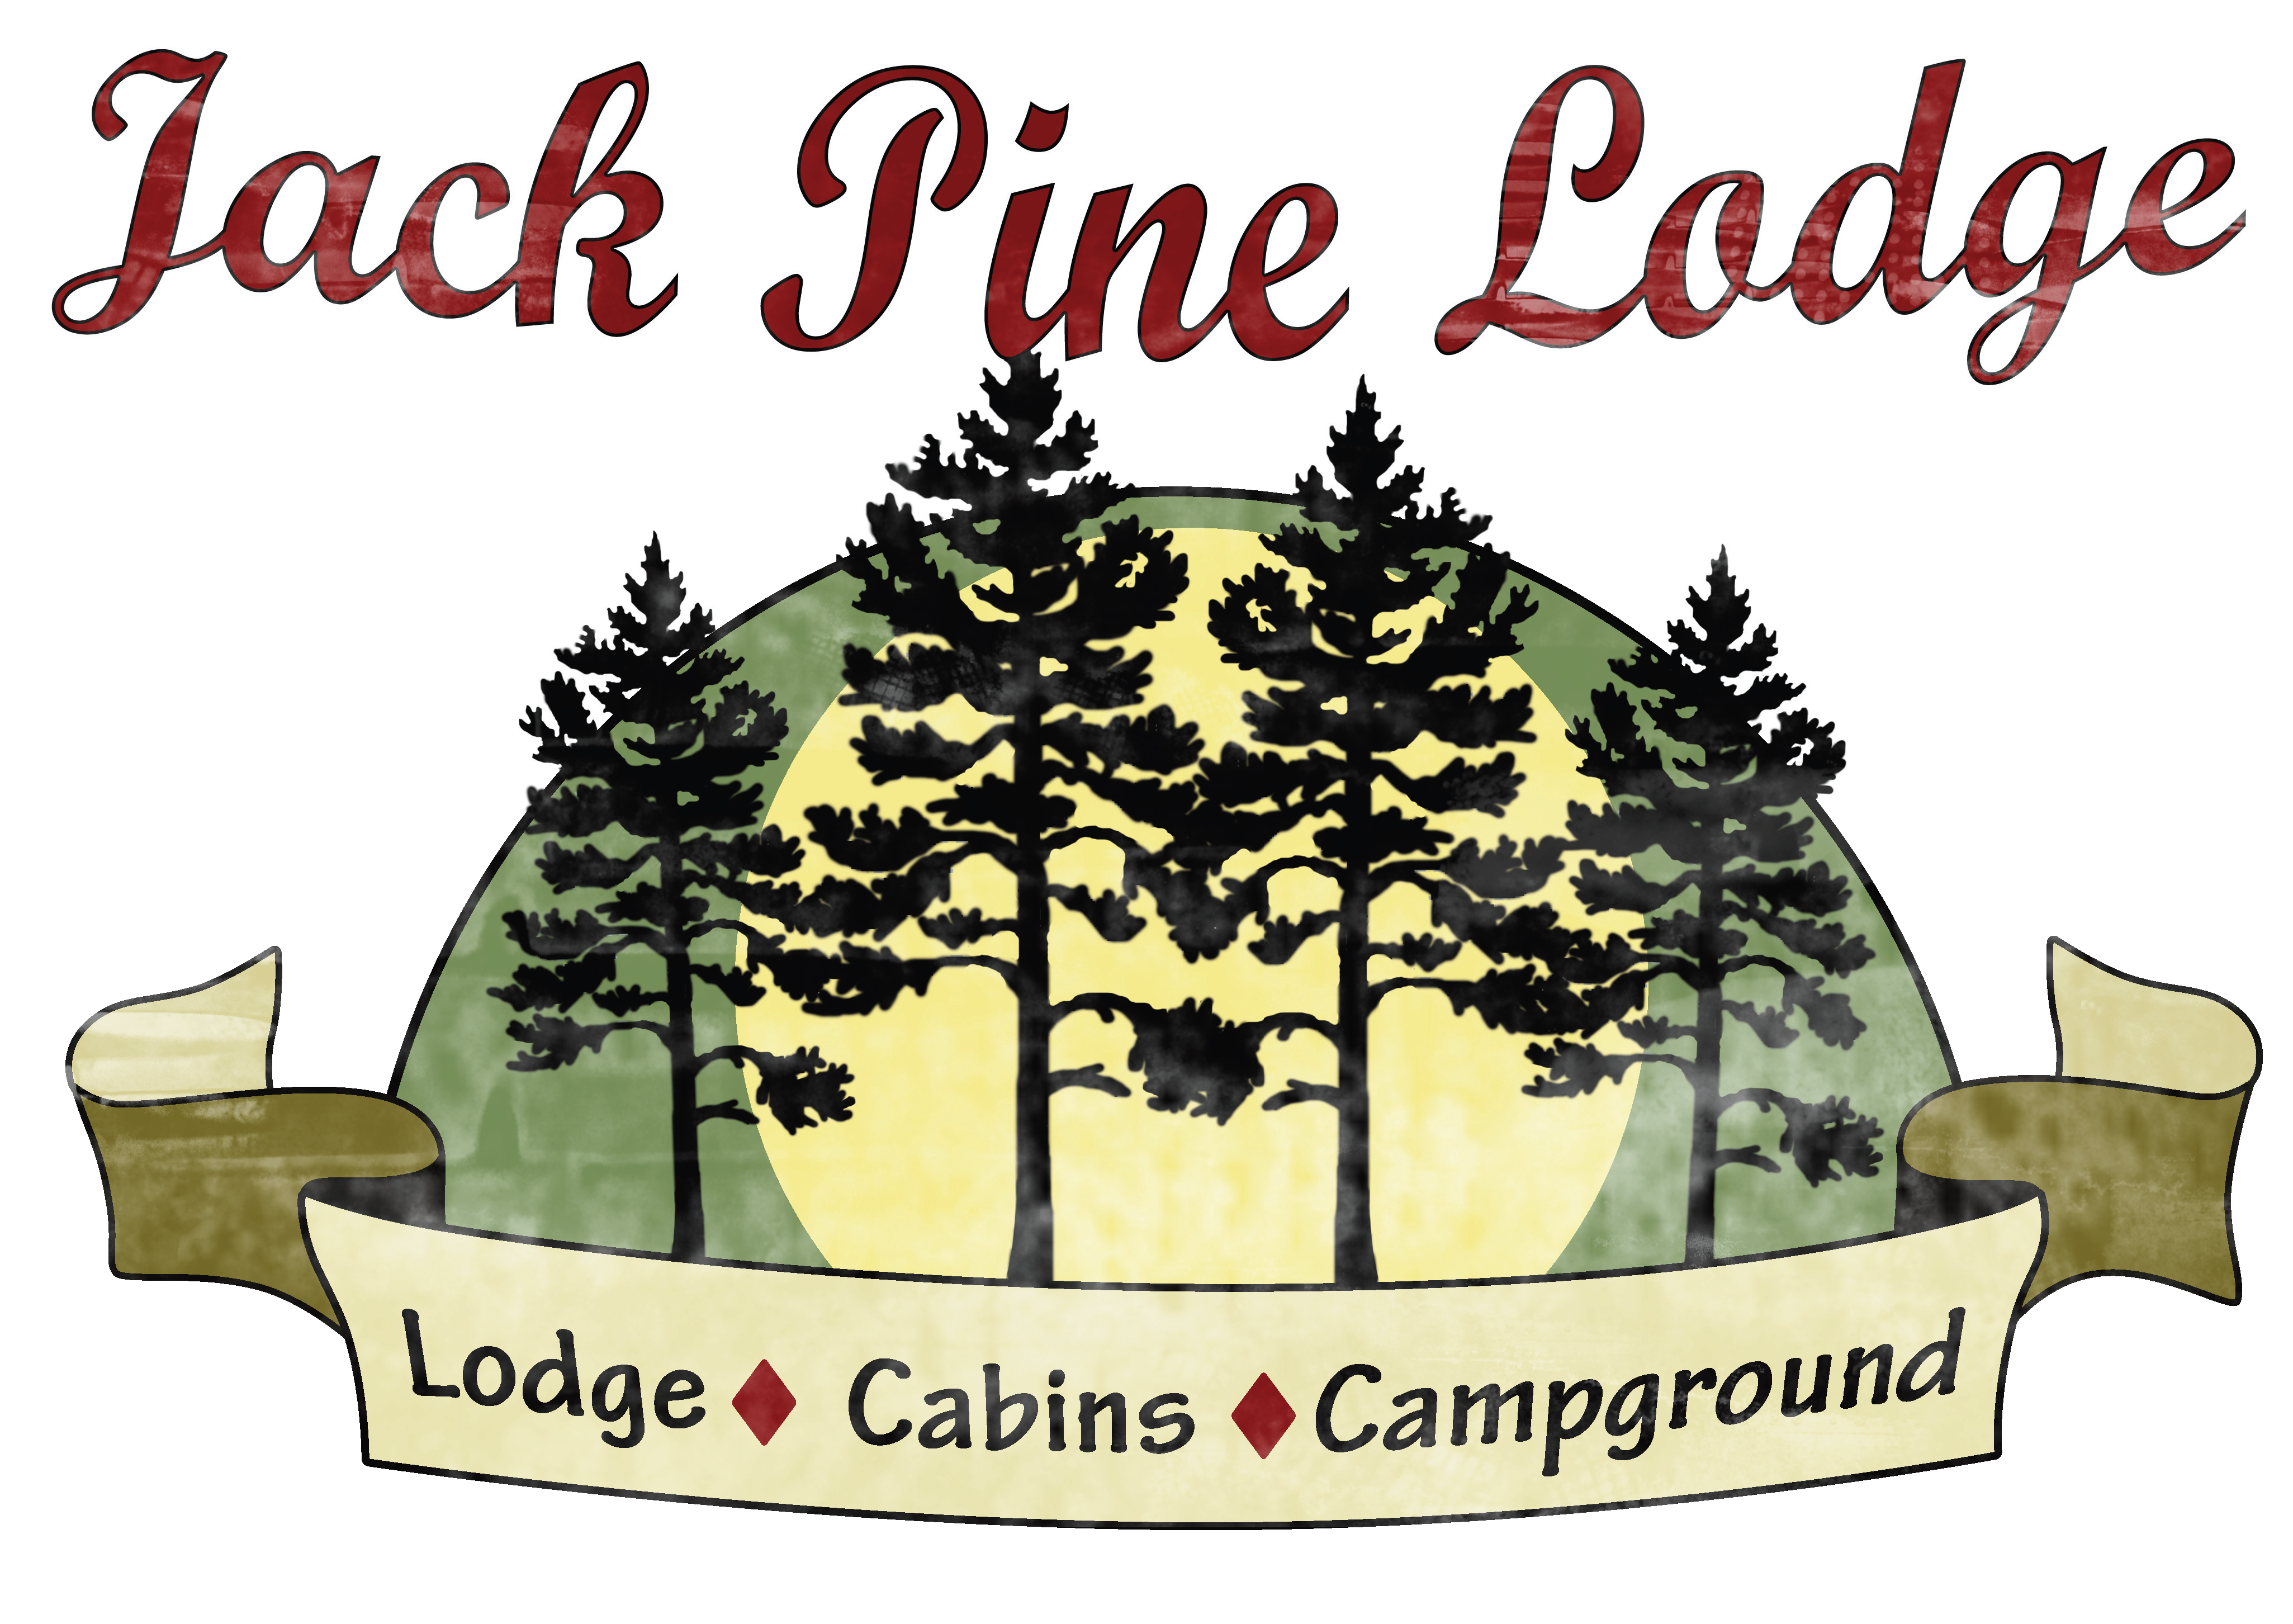 Jackpine Lodge and Campground